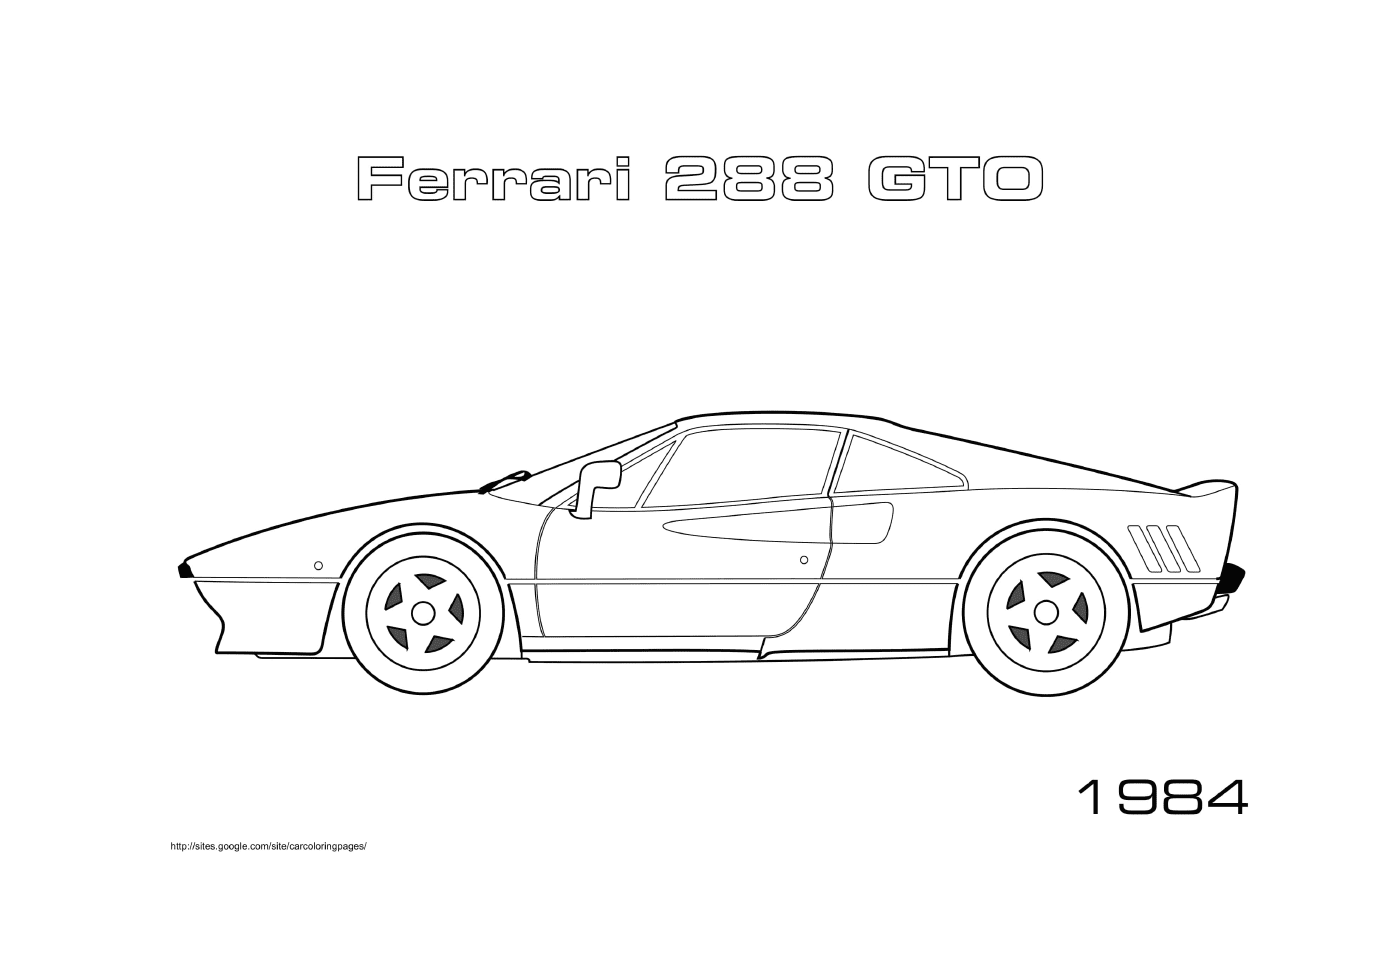  A Ferrari 288 GTO 1984 